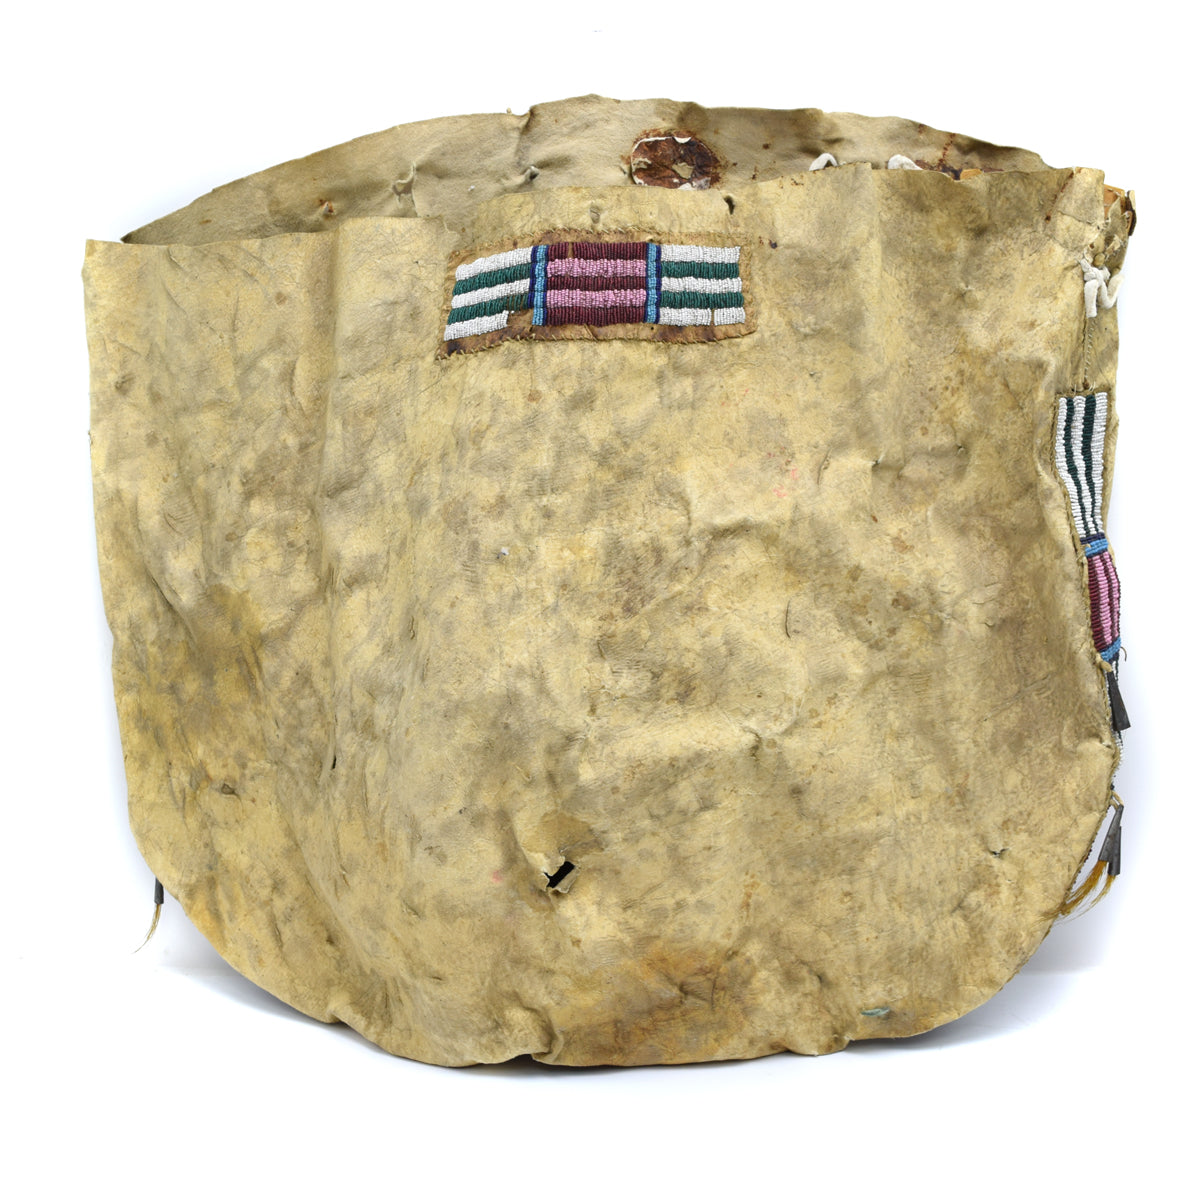 Sioux Beaded Leather Single Saddle/Teepee Bag c. 1890s, 20" x 22.5" (DW91963-0121-001)
